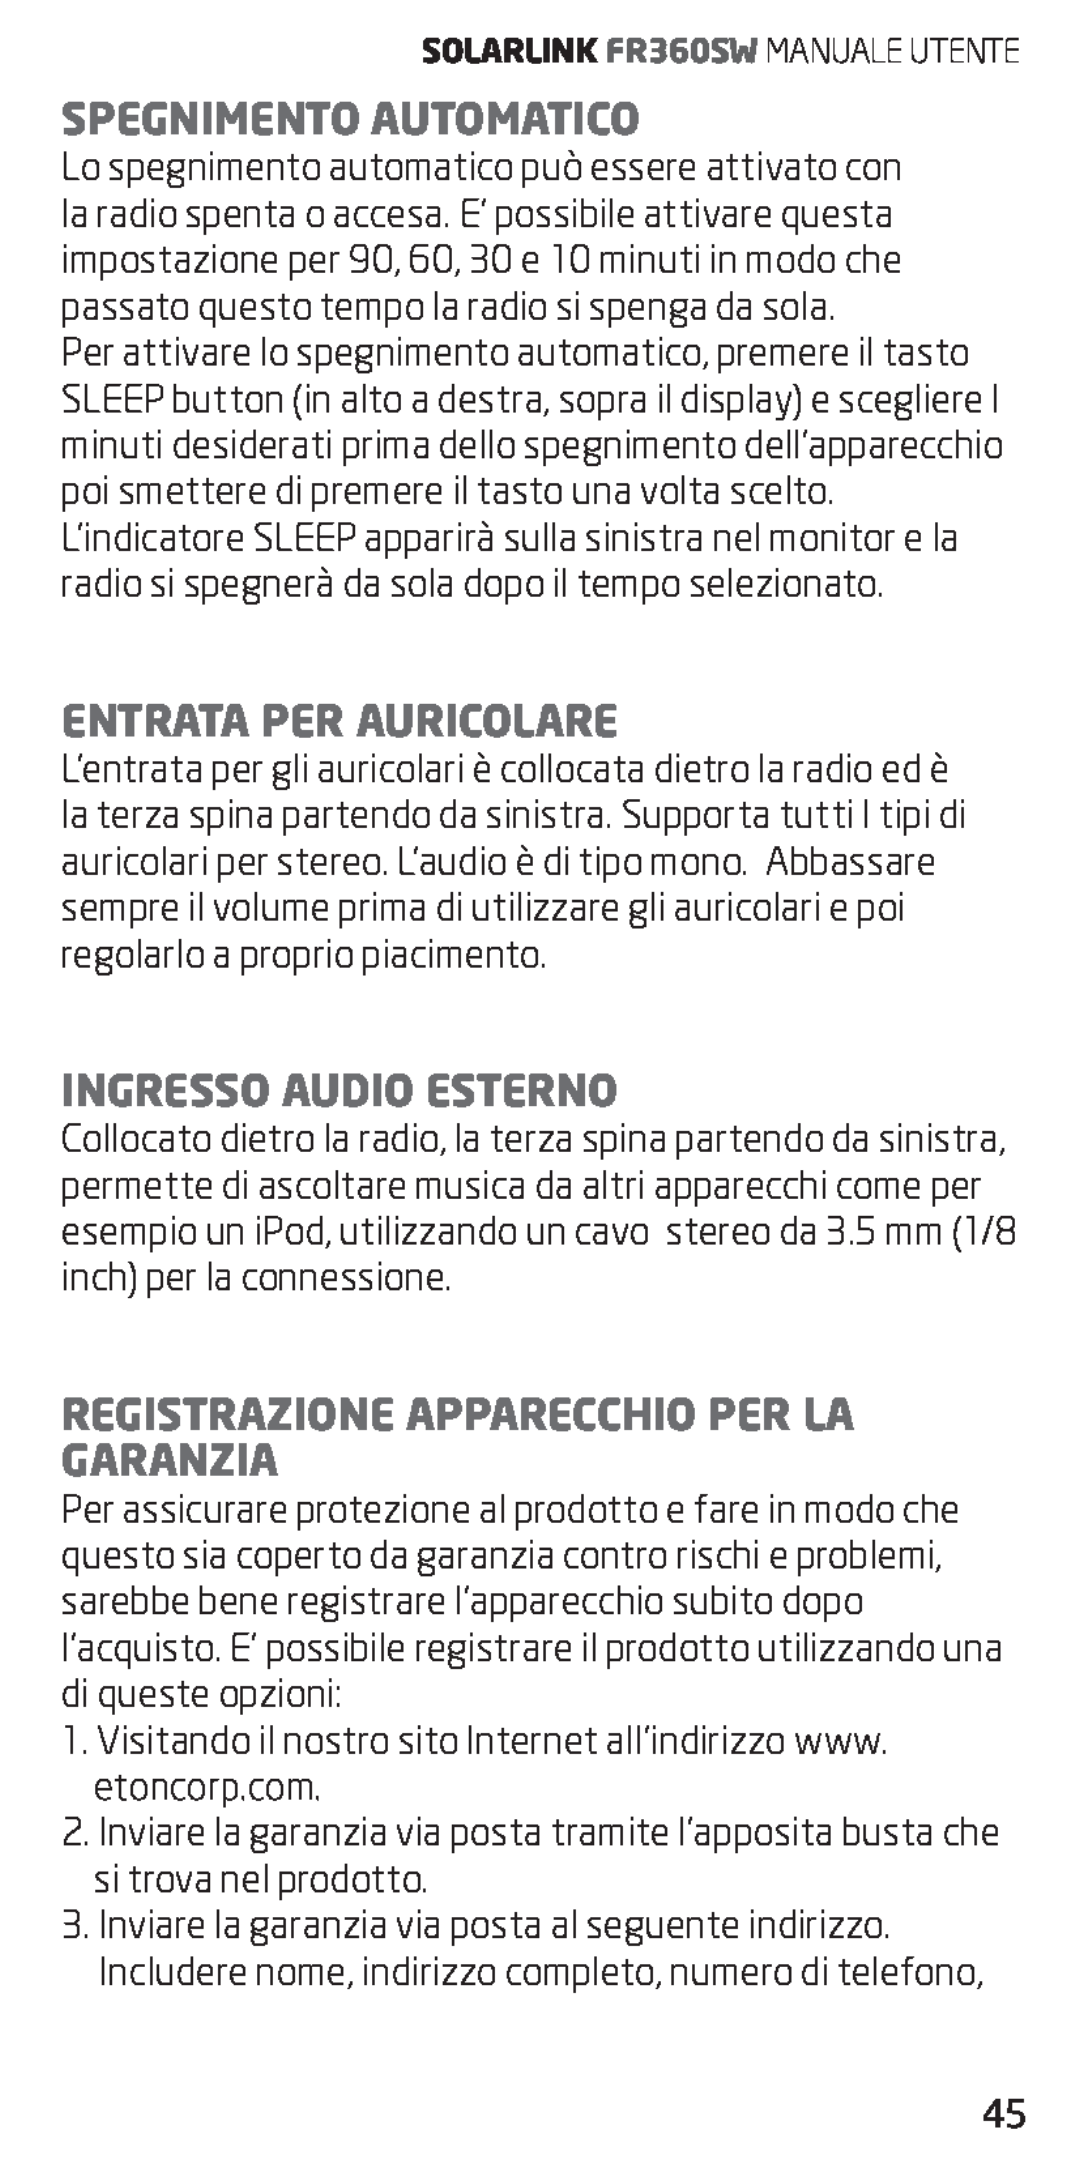 Eton FR360 owner manual Spegnimento Automatico, Entrata Per Auricolare, Ingresso Audio Esterno 